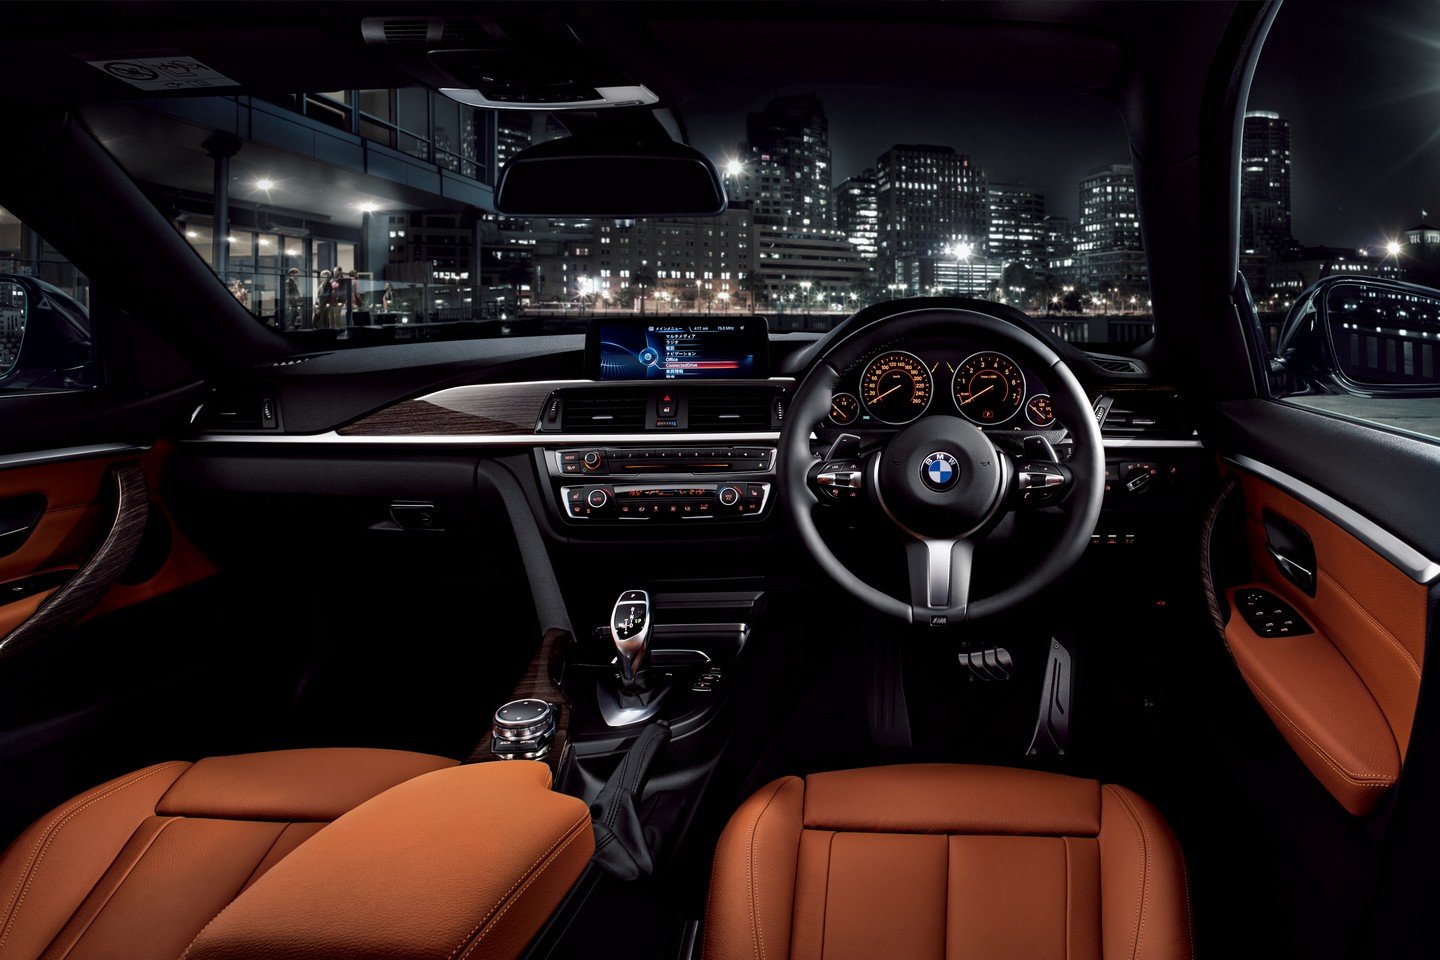 BMW řady 4 Gran Coupe v edici In Style